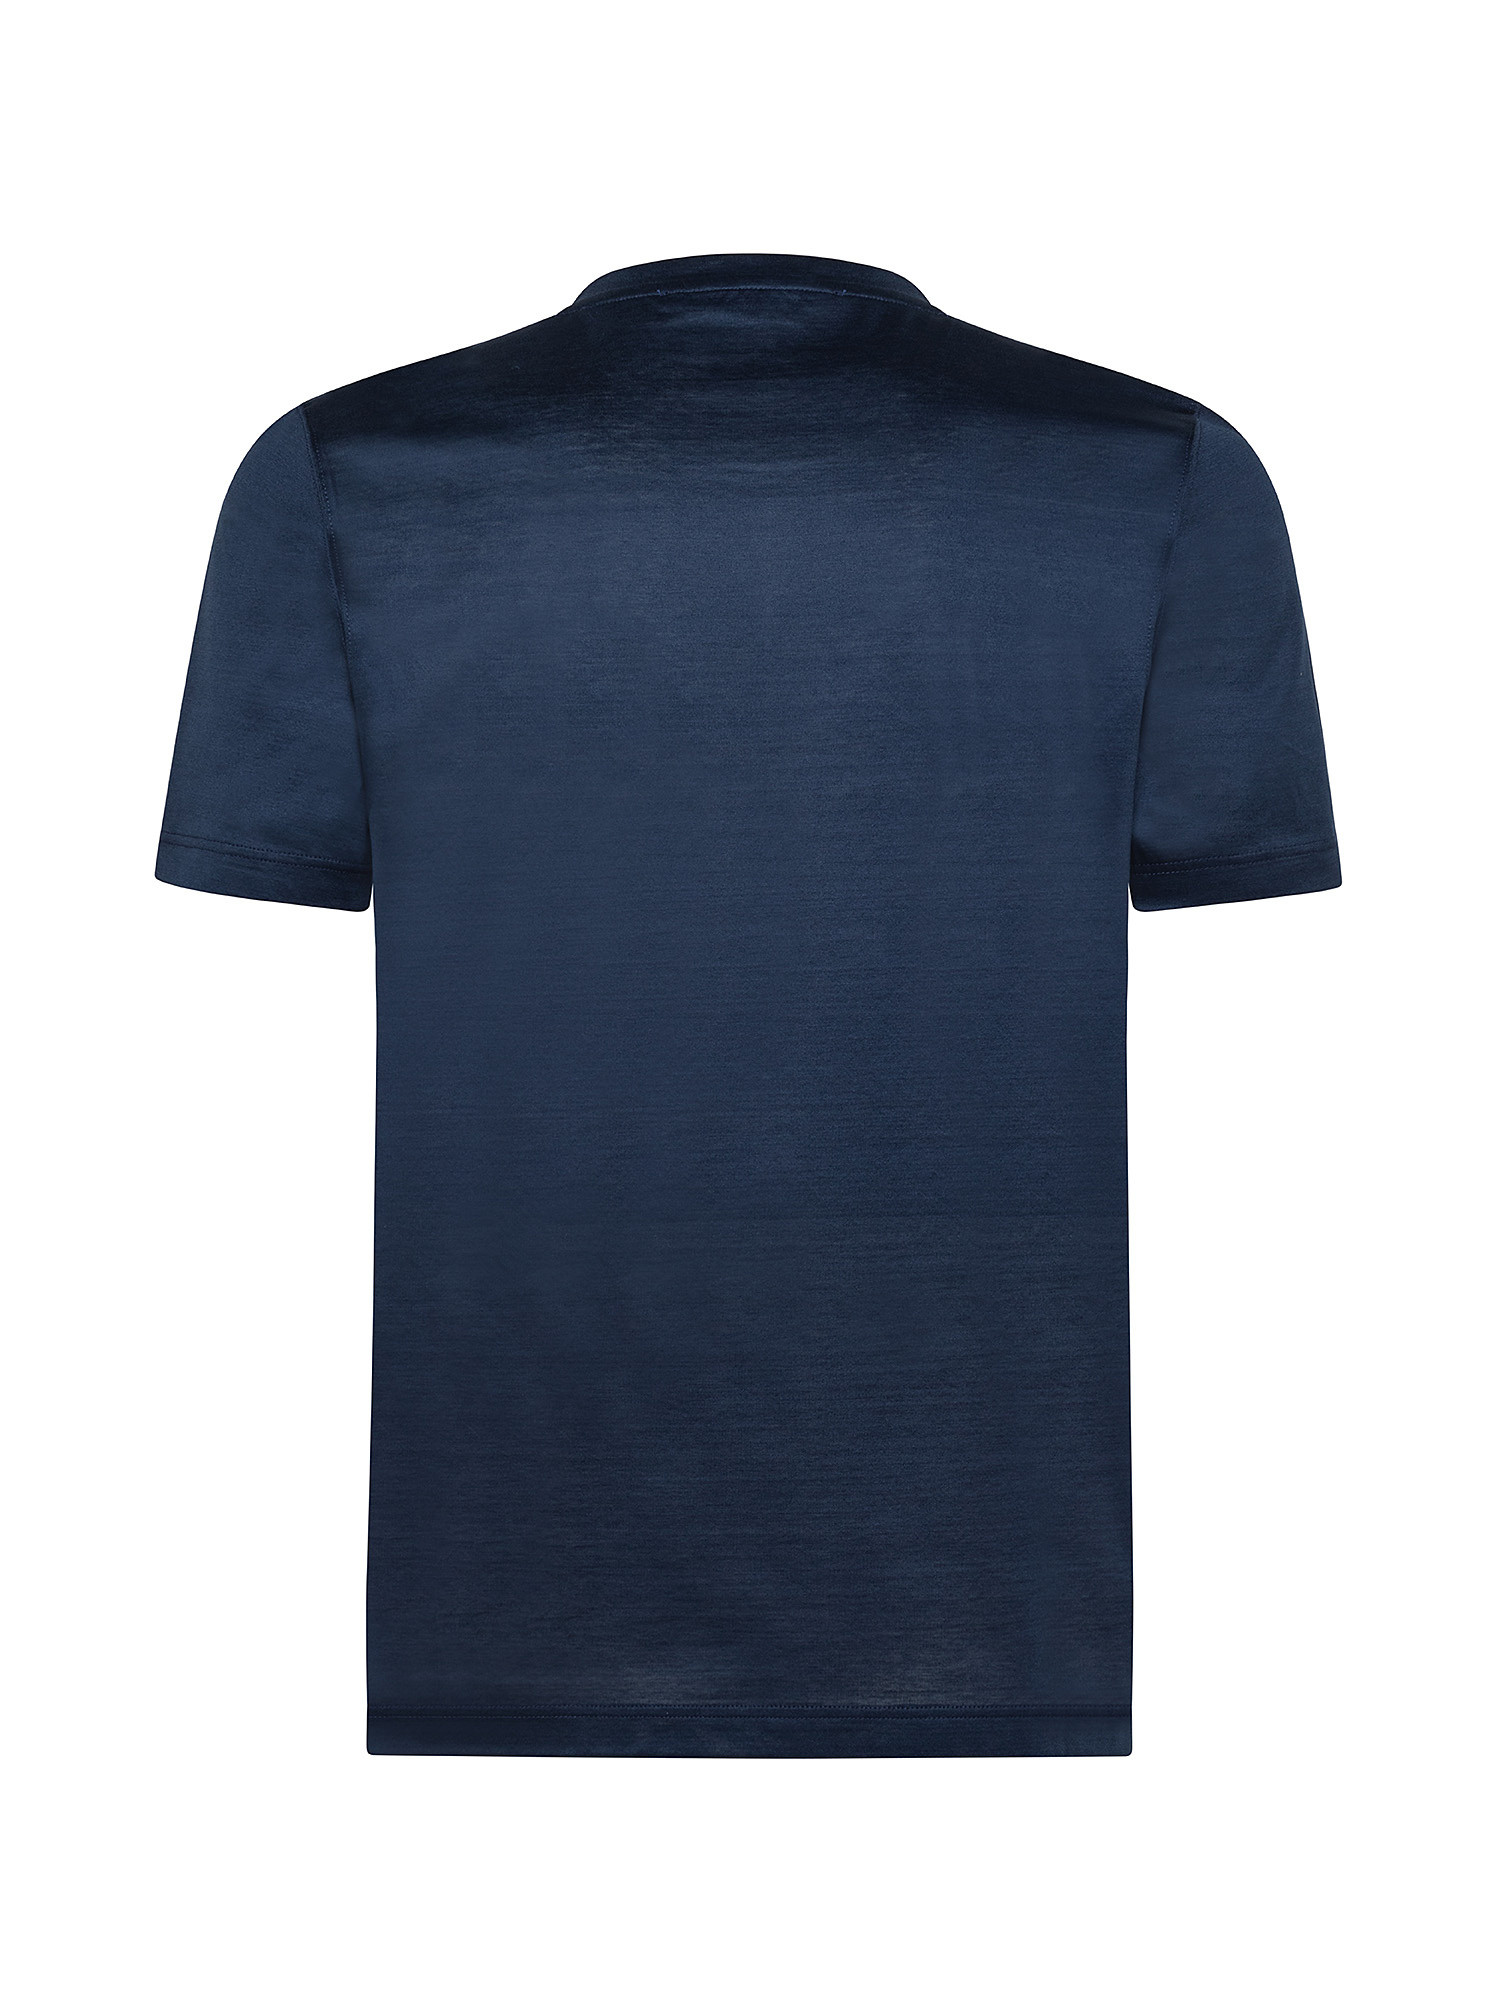 Short sleeve crew neck T-shirt, Blue, large image number 1